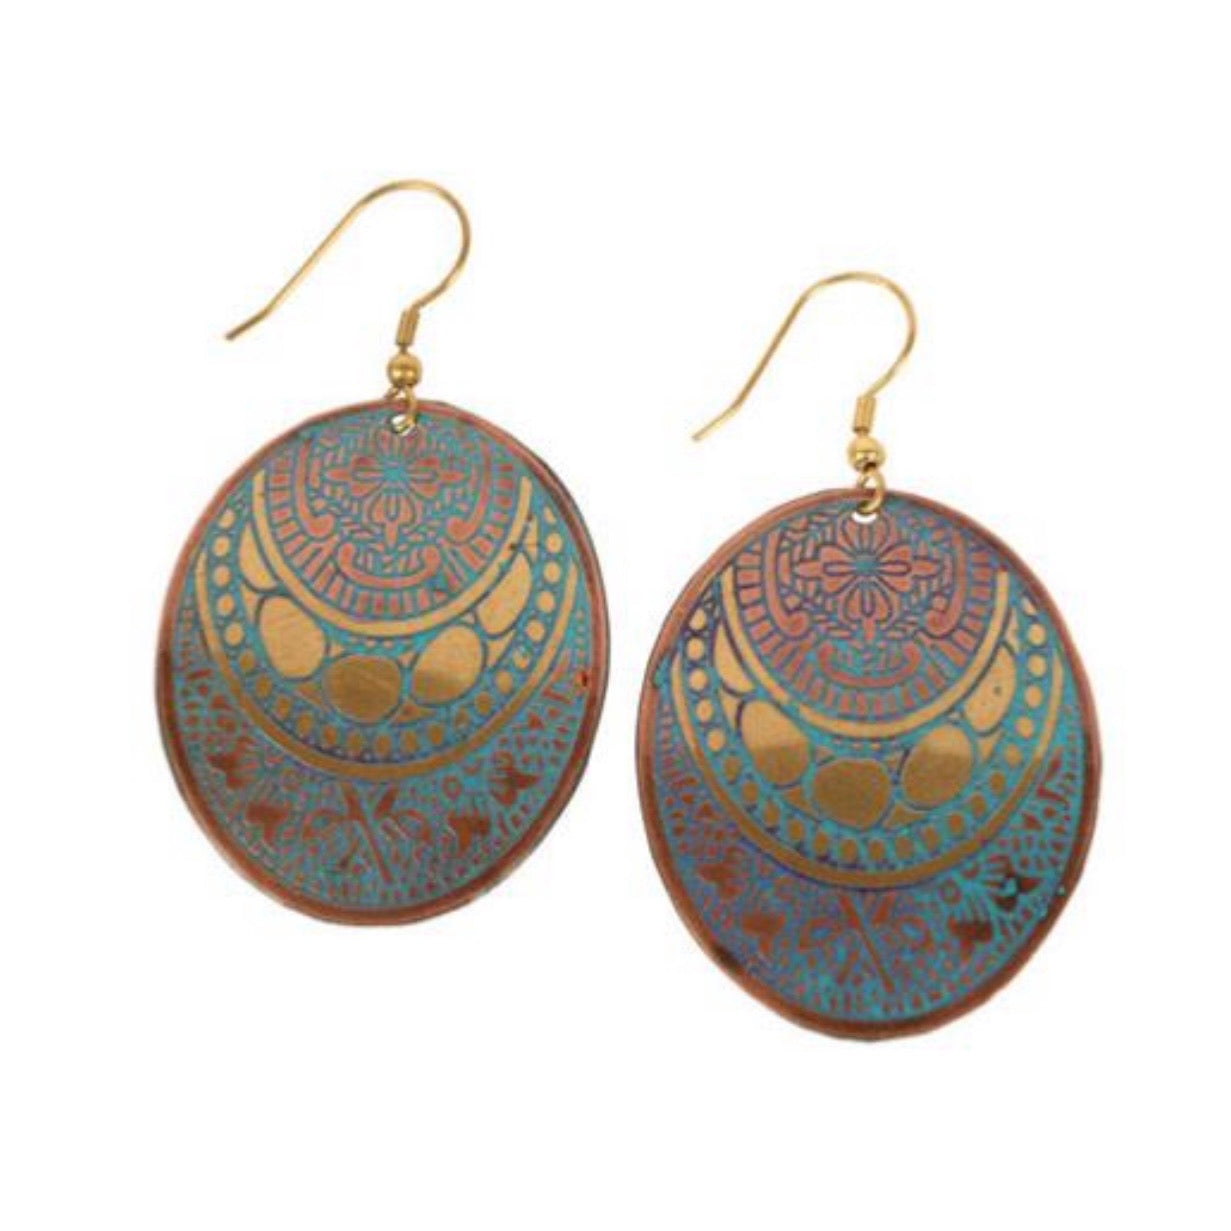 Turquoise Oval Earrings - The Nancy Smillie Shop - Art, Jewellery & Designer Gifts Glasgow